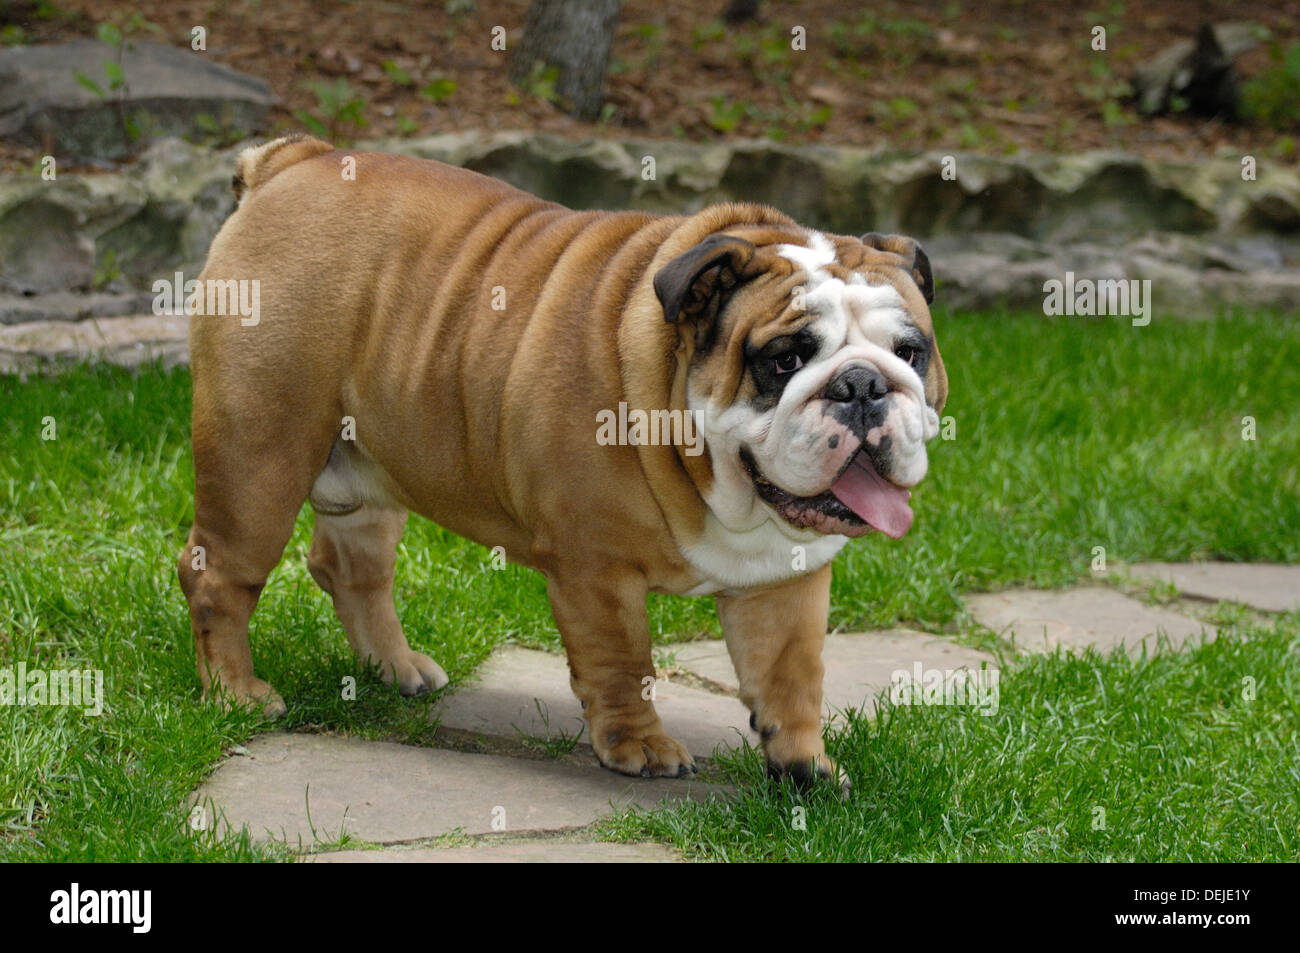 English bulldog standing in grass Stock Photo